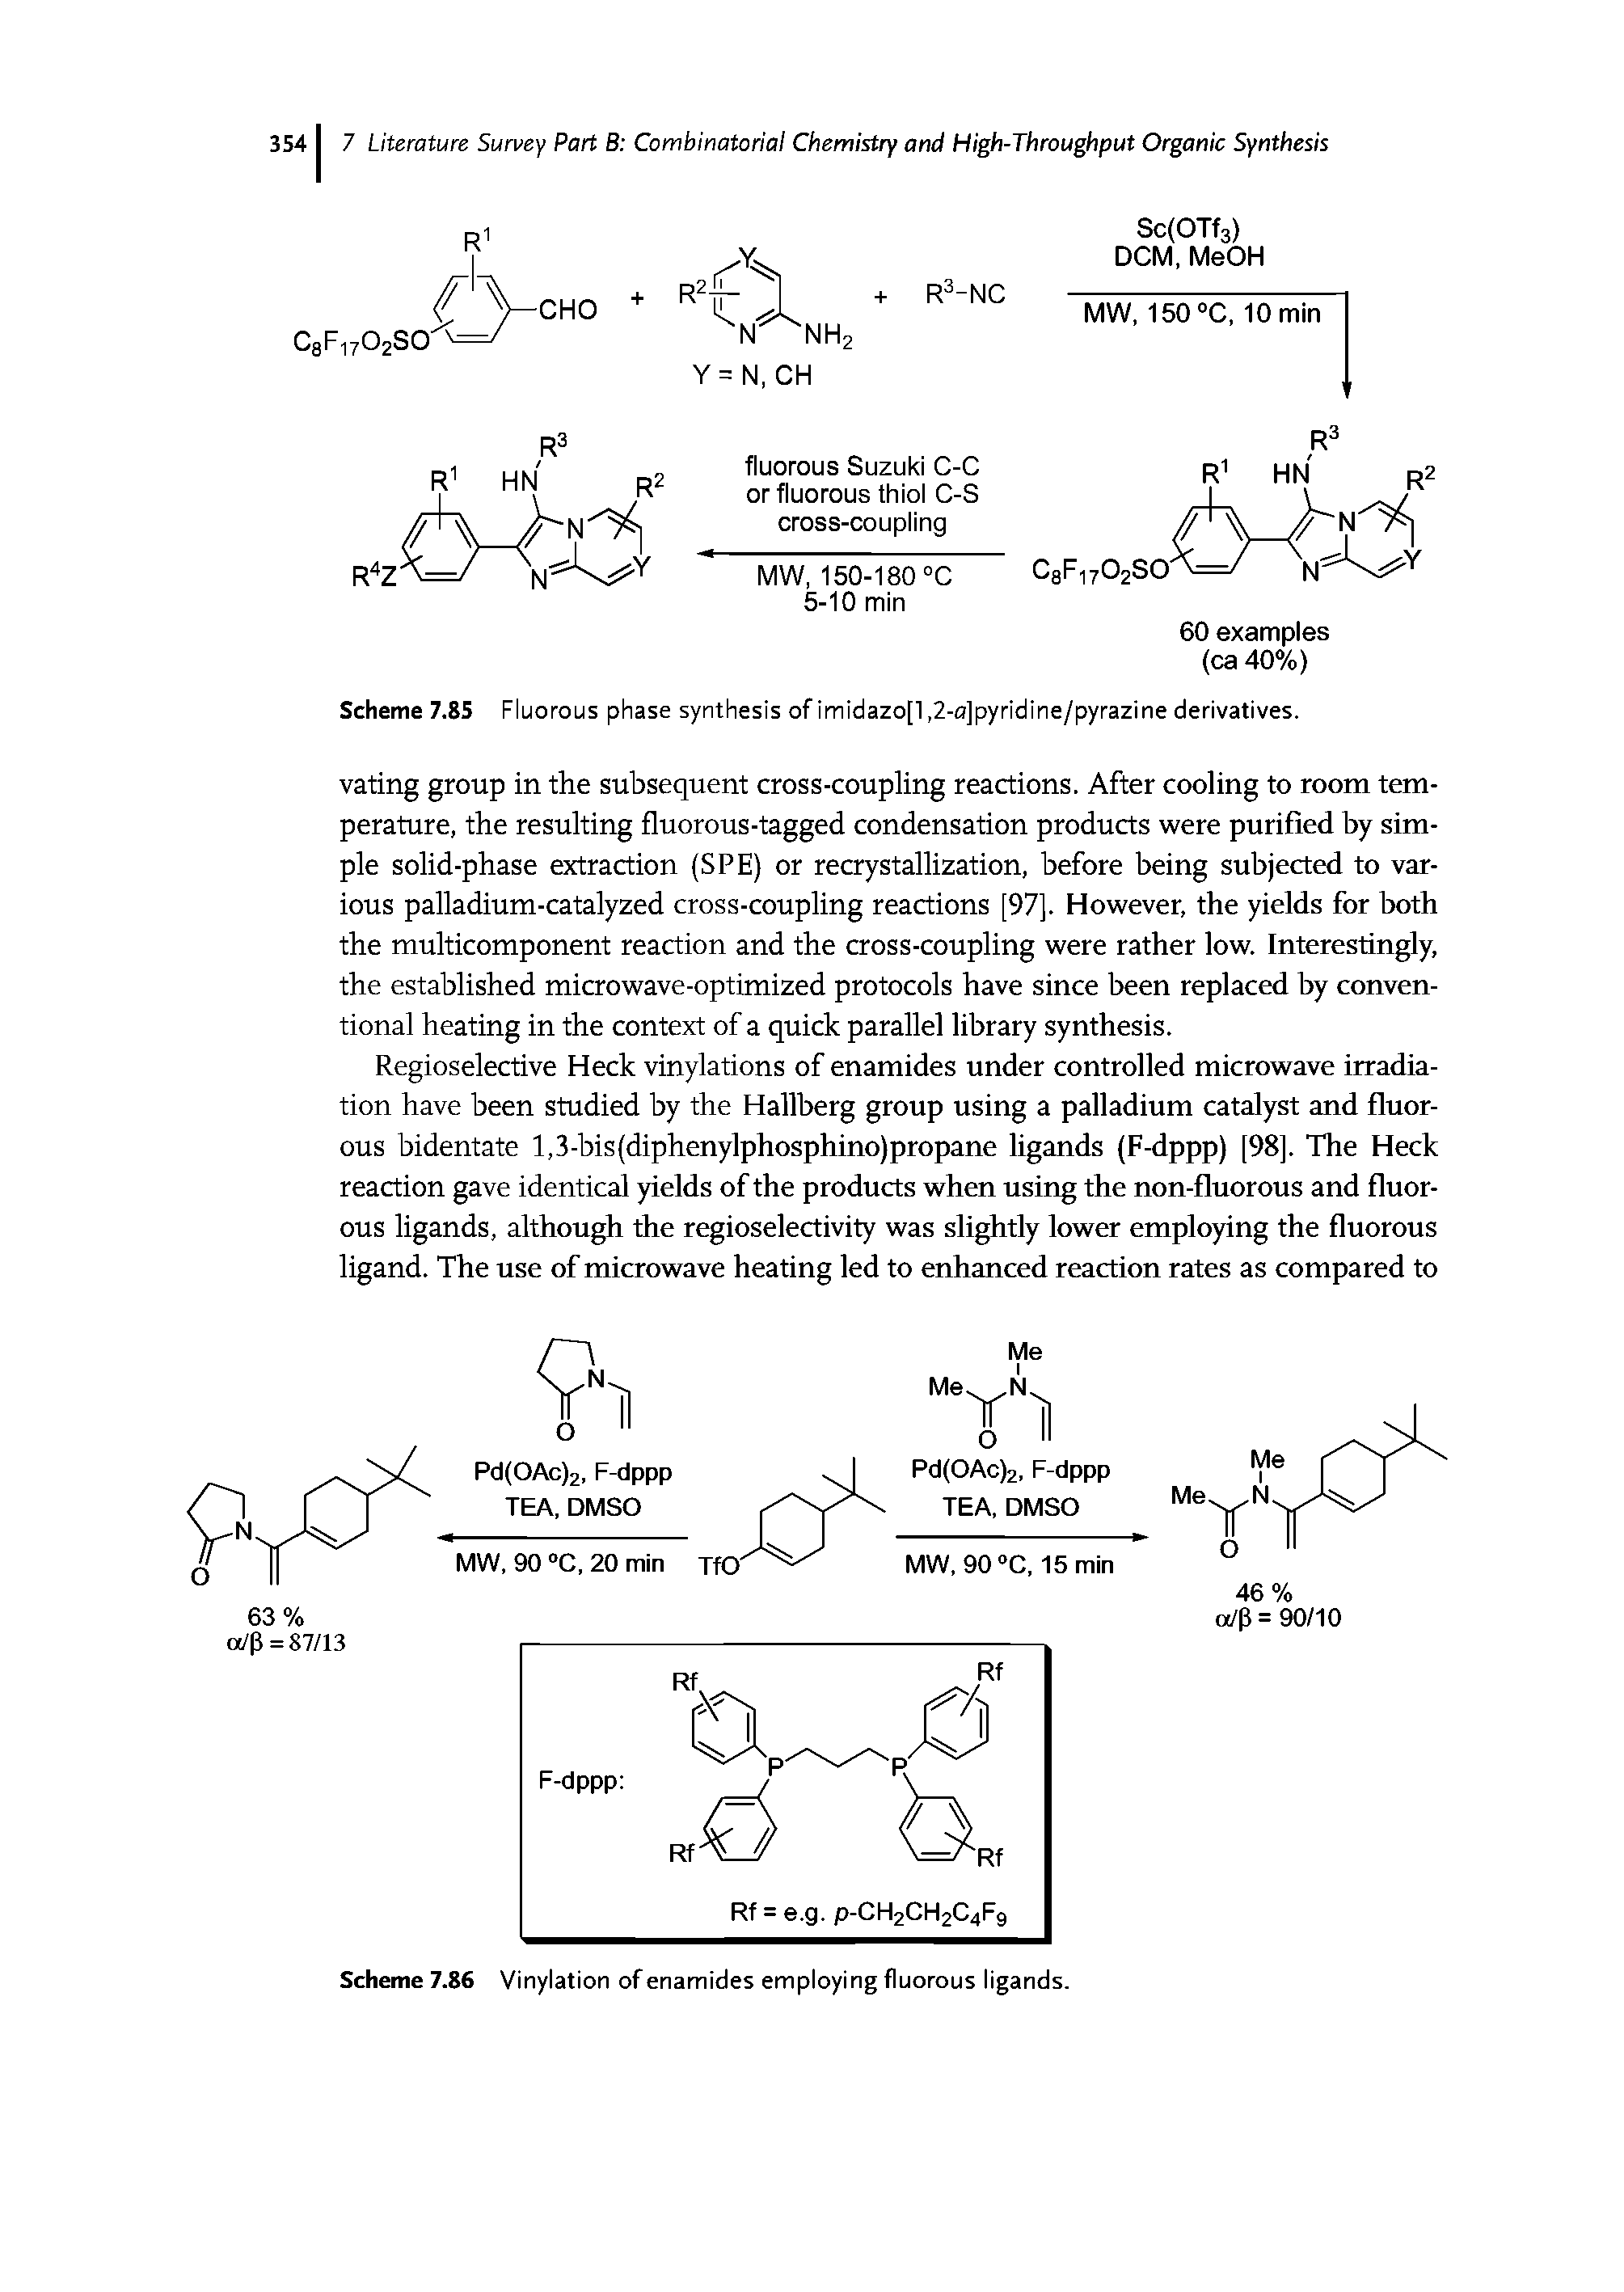 Scheme 7.85 Fluorous phase synthesis of imidazo[l,2-a]pyridine/pyrazine derivatives.